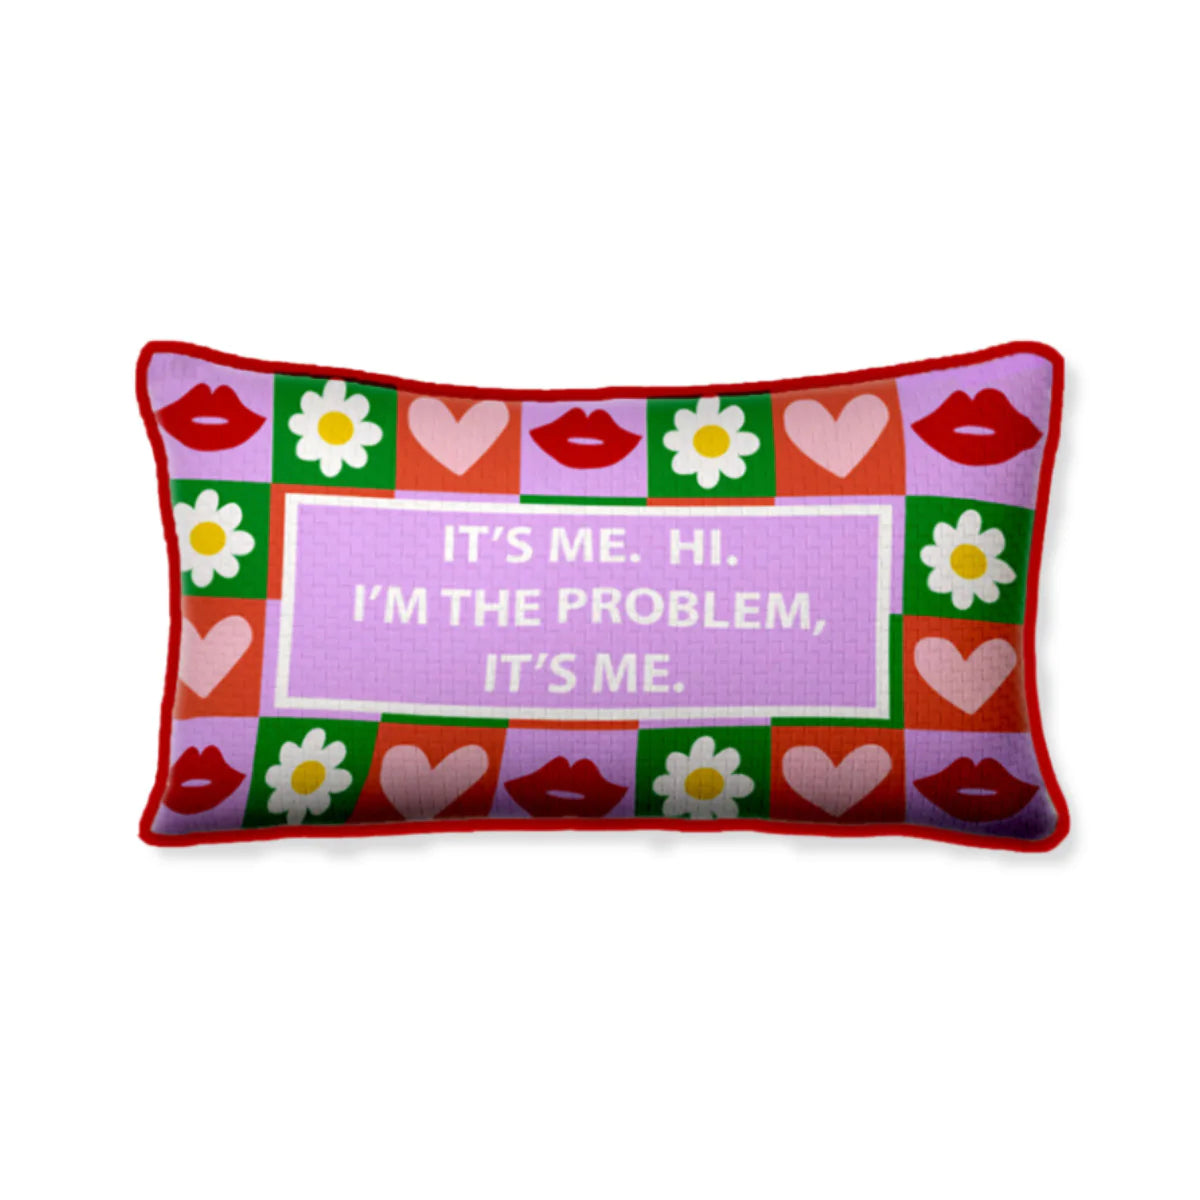 Hi, I'm the Problem Needlepoint Pillow